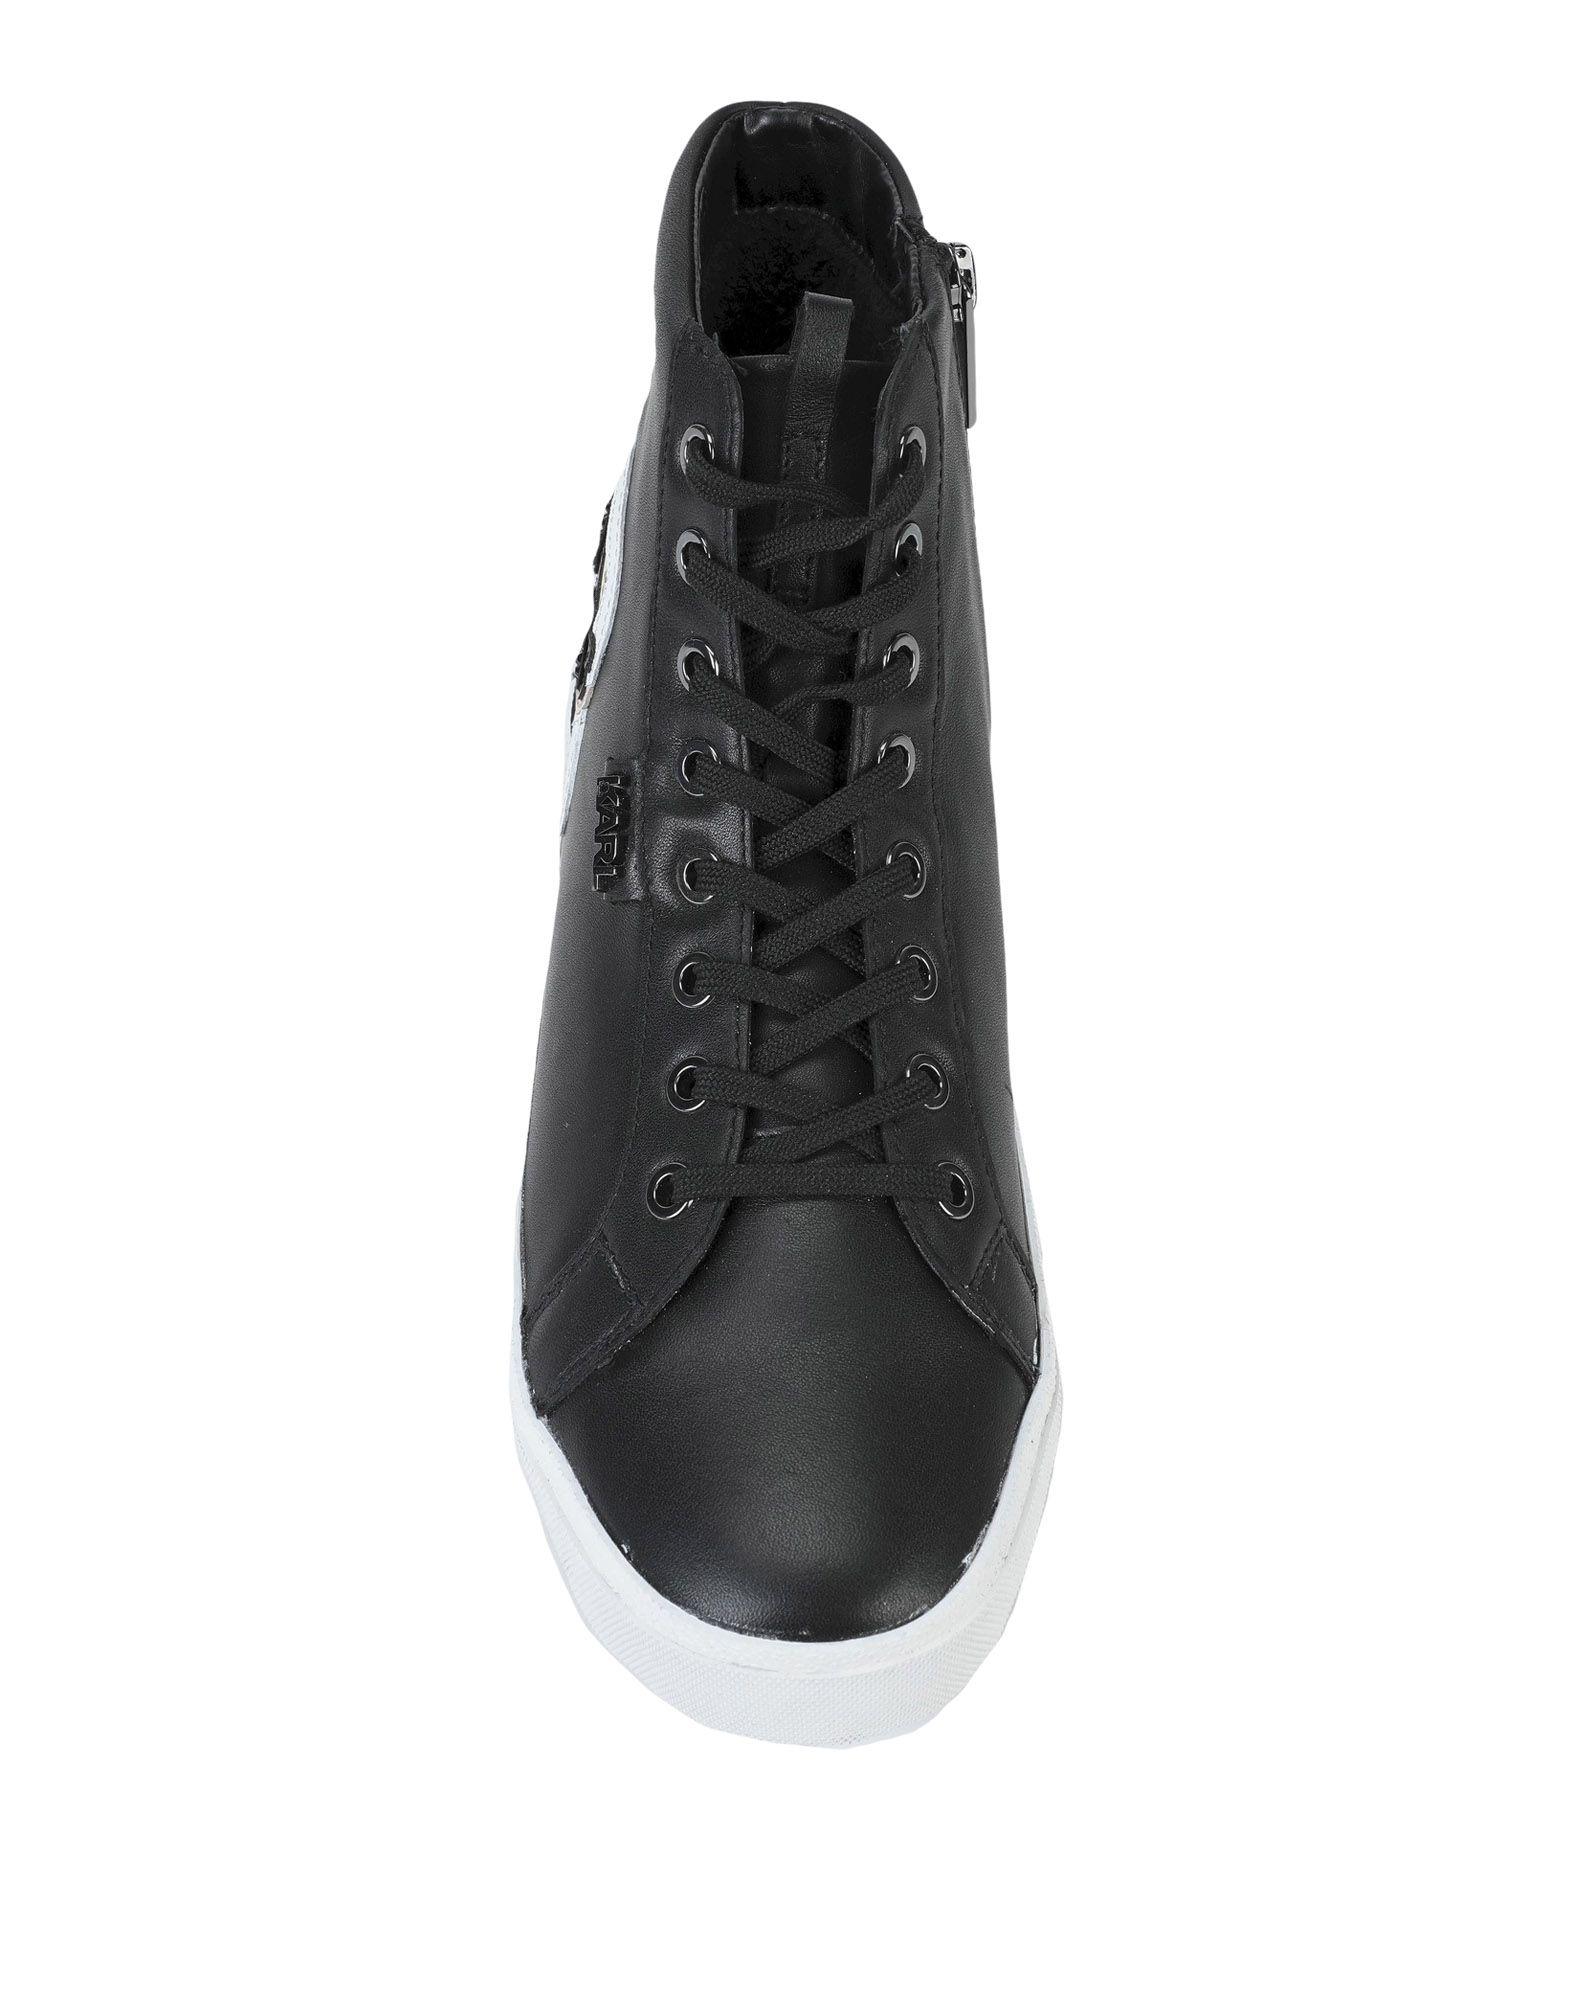 Karl Lagerfeld Leather High-tops & Sneakers in Black - Lyst